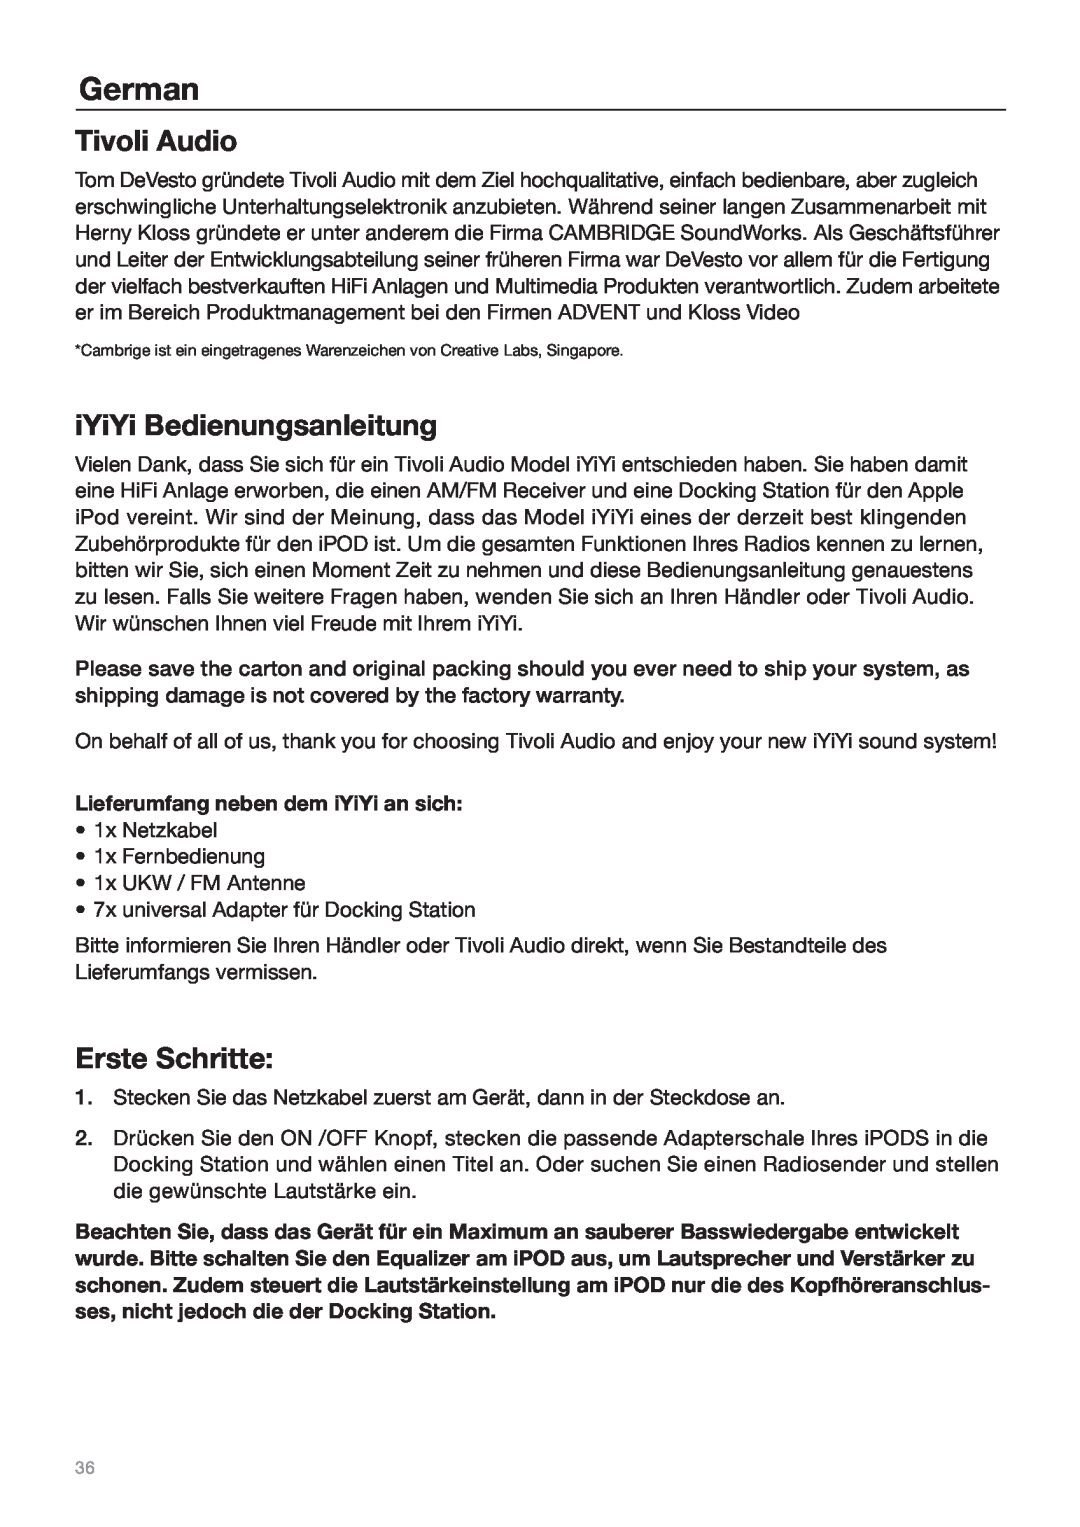 Tivoli Audio Sound System owner manual German, Tivoli Audio, iYiYi Bedienungsanleitung, Erste Schritte 